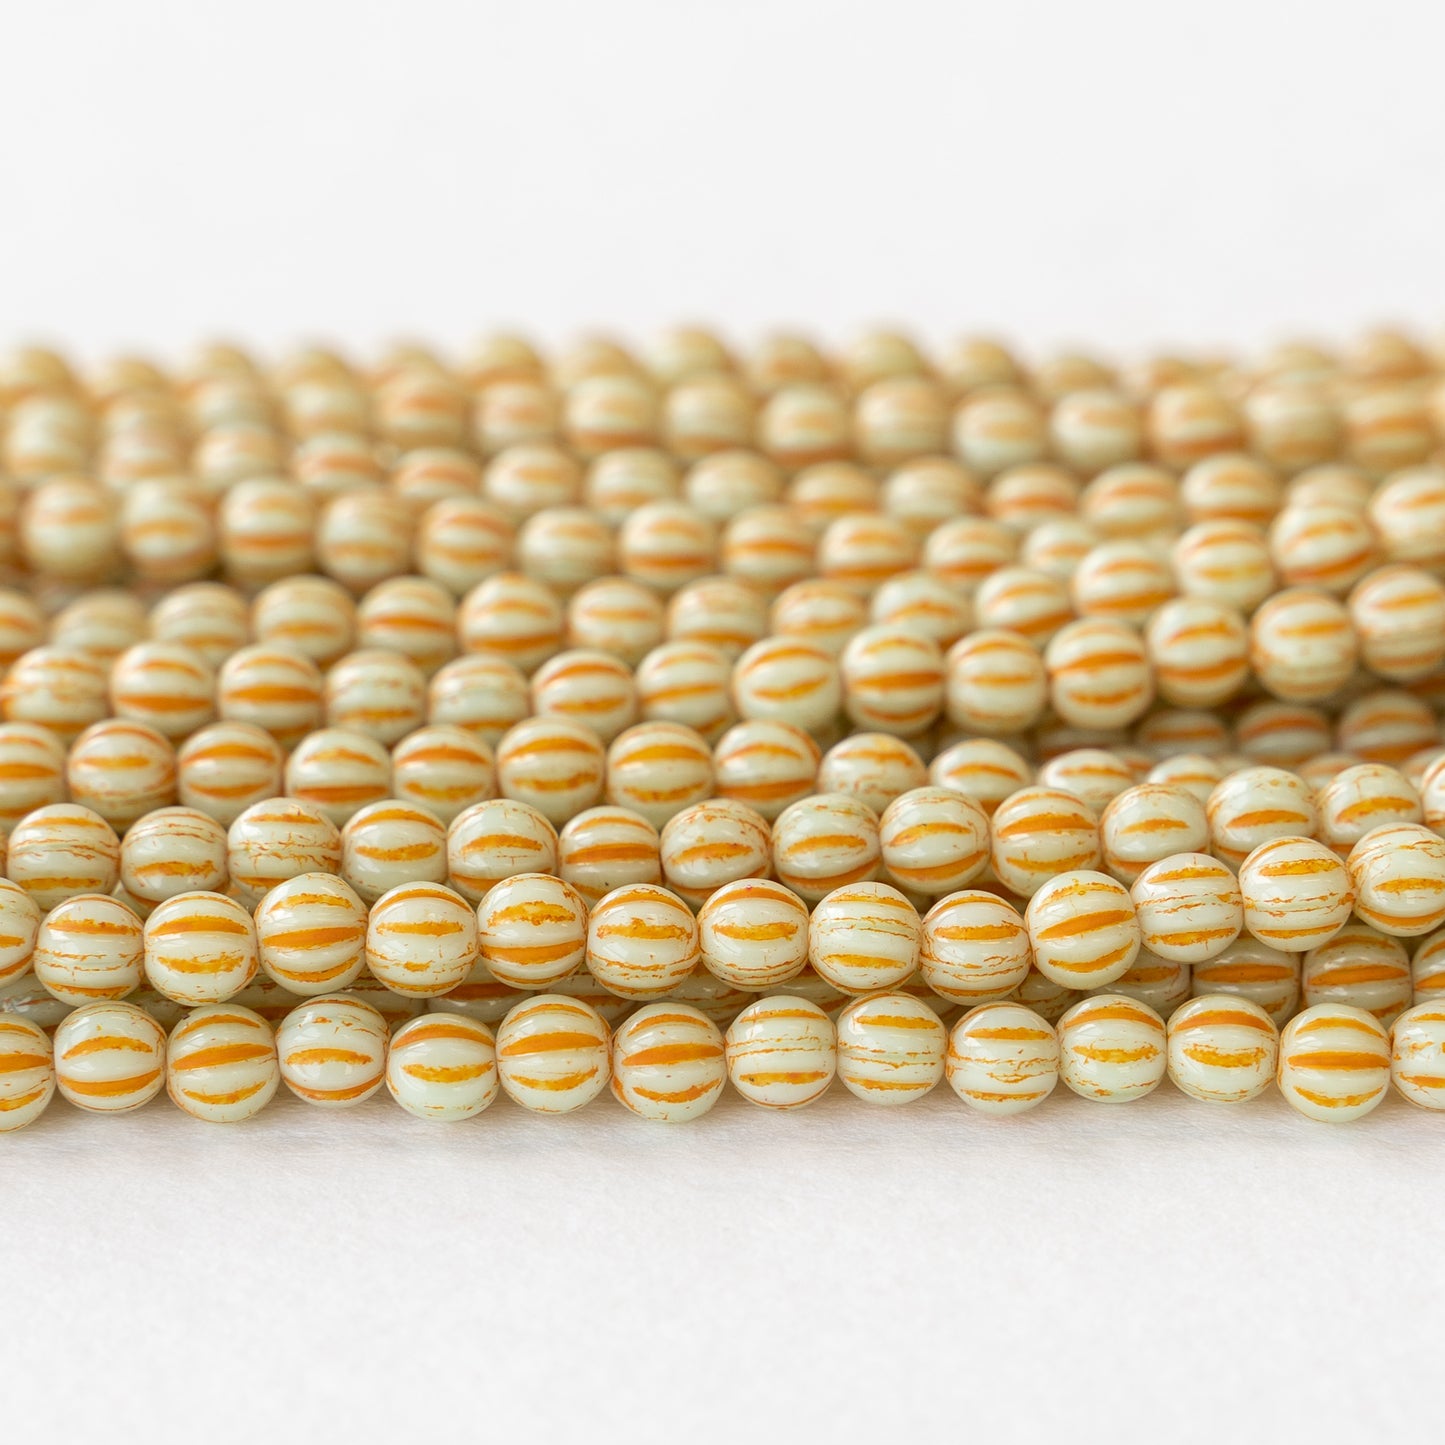 4mm Melon Beads - Ivory with Orange Wash - 58 Beads